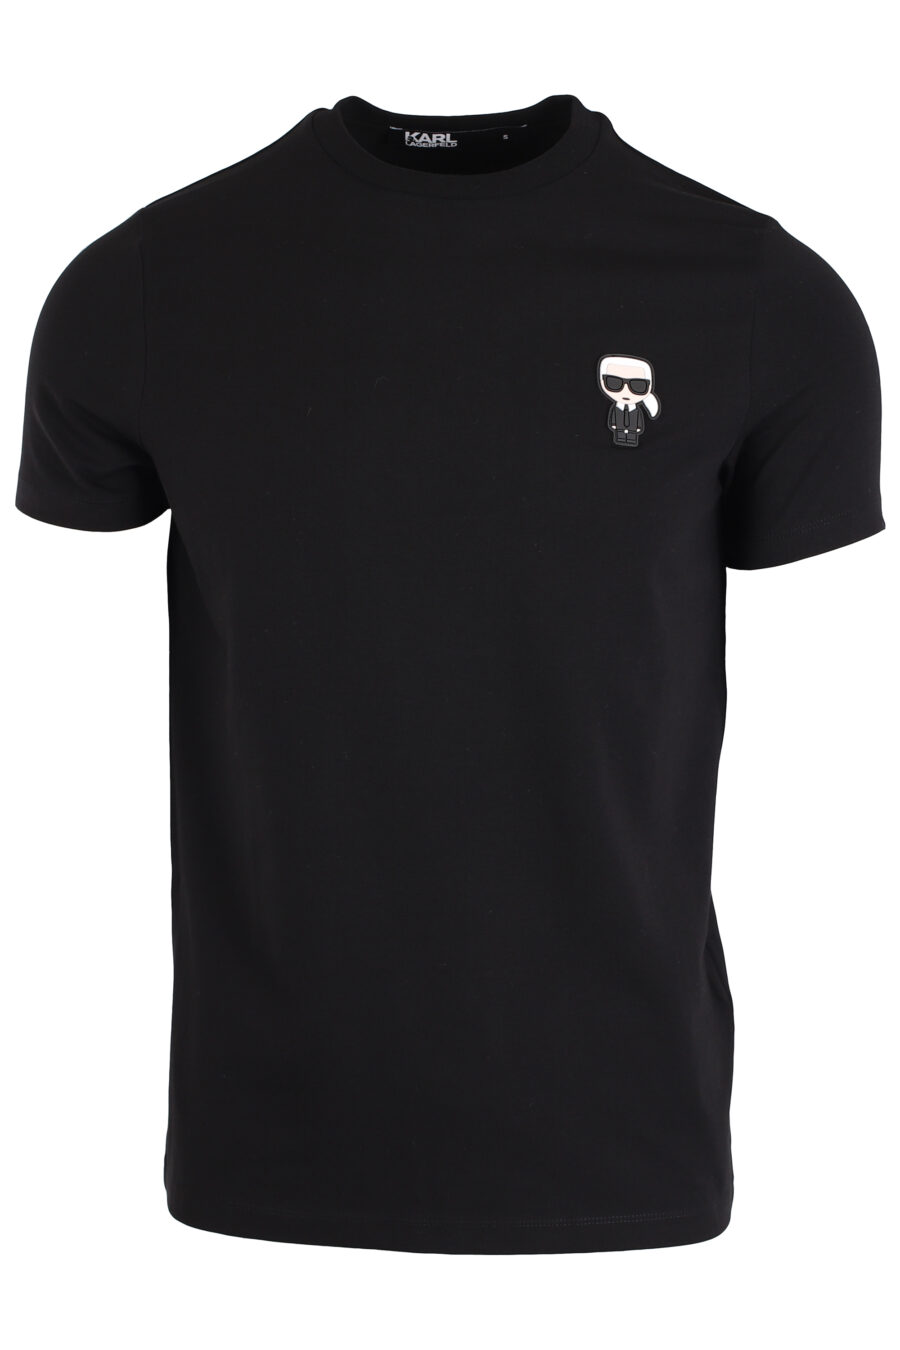 T-shirt noir avec logo "ikonik" - IMG 3976